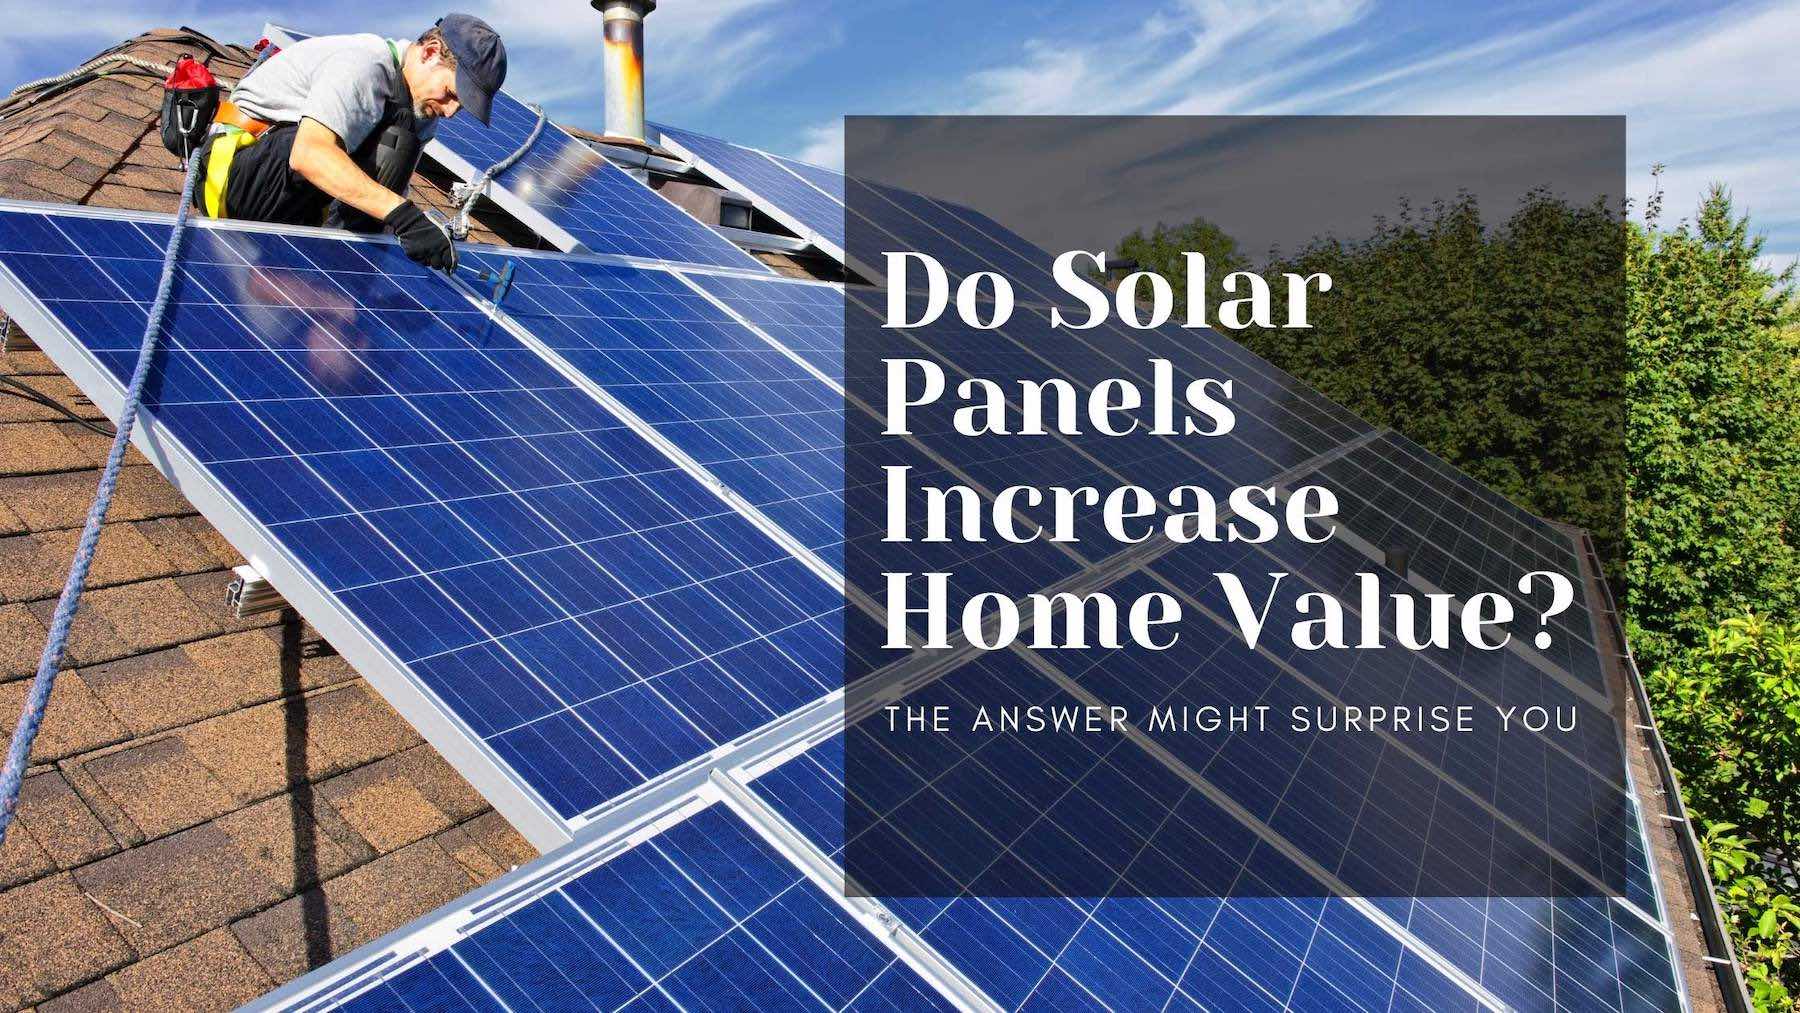 Do solar panels increase home value?